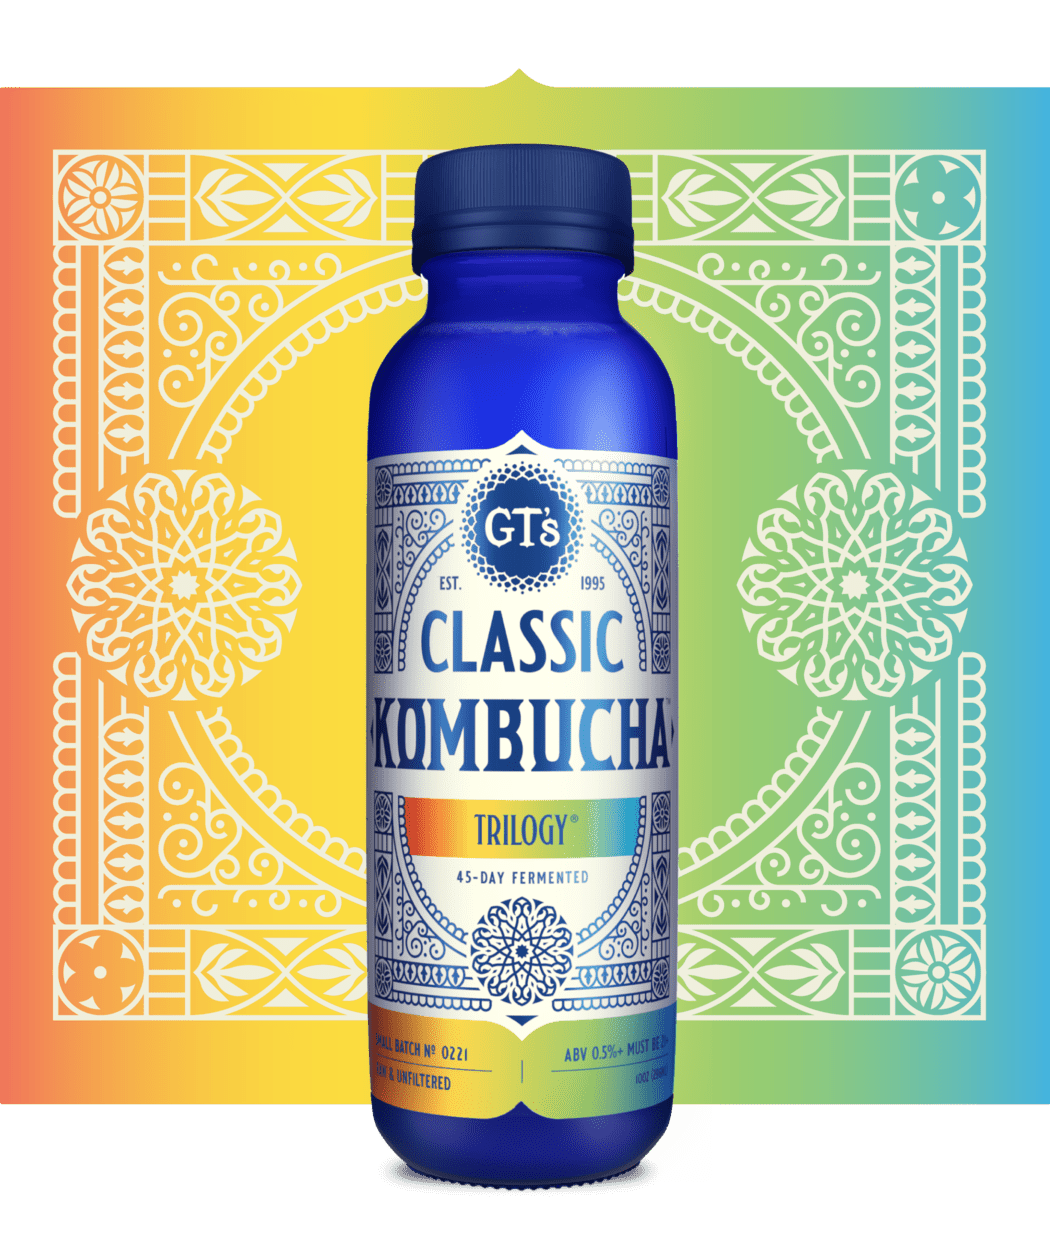 GT's CLASSIC KOMBUCHA Trilogy Bottle Render